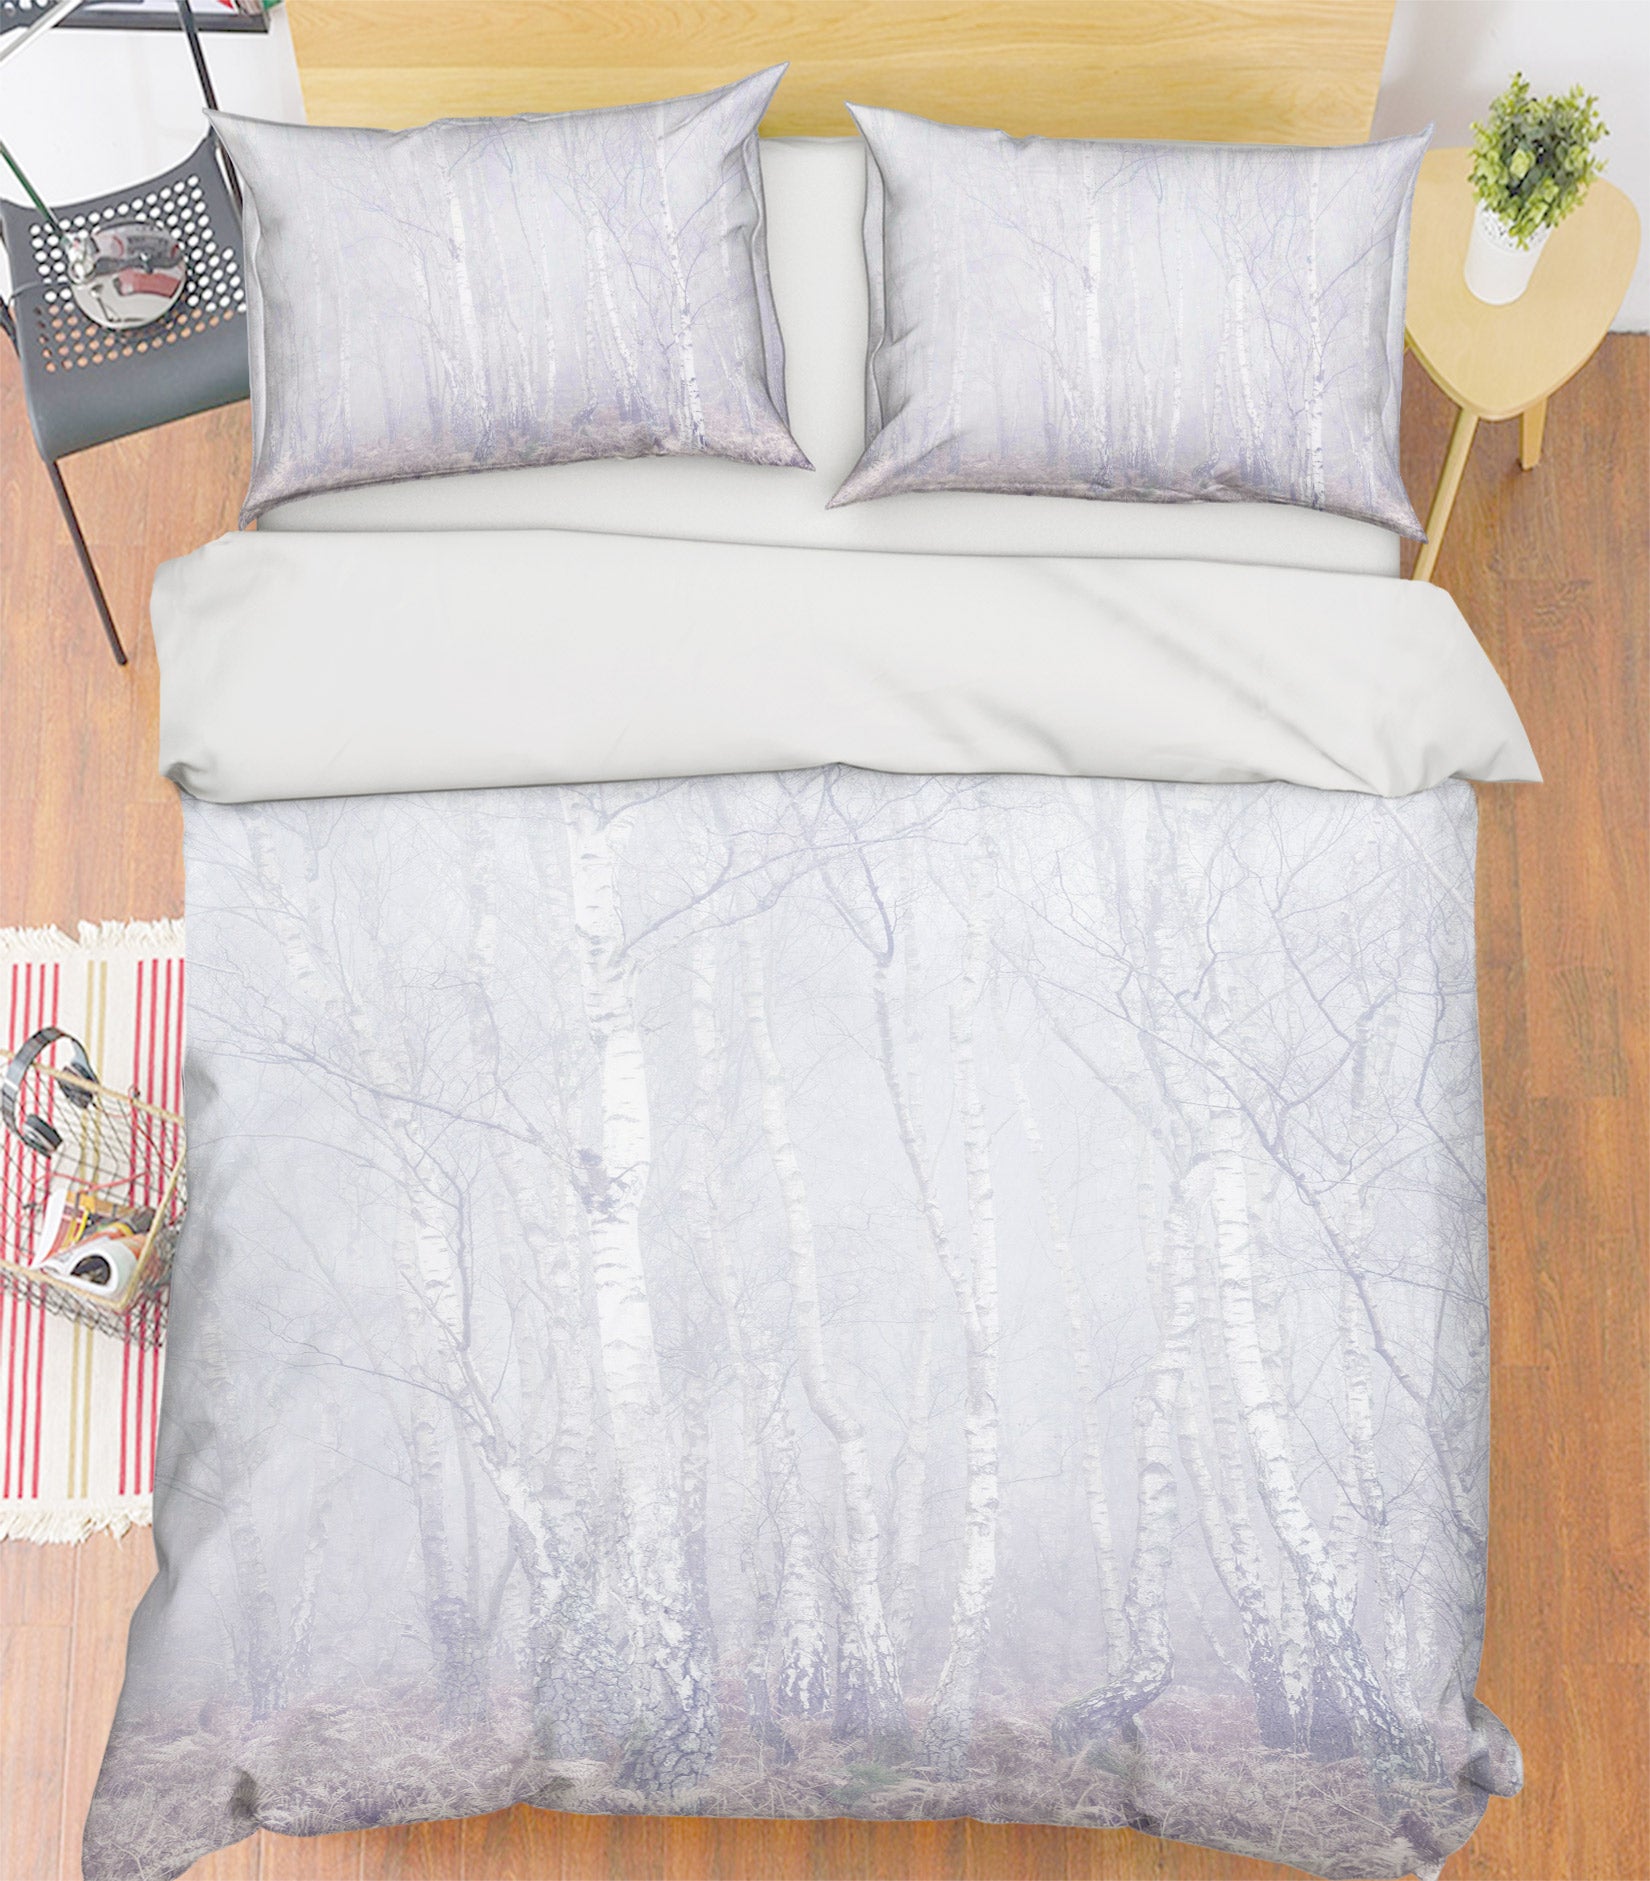 3D Foggy Forest 6981 Assaf Frank Bedding Bed Pillowcases Quilt Cover Duvet Cover